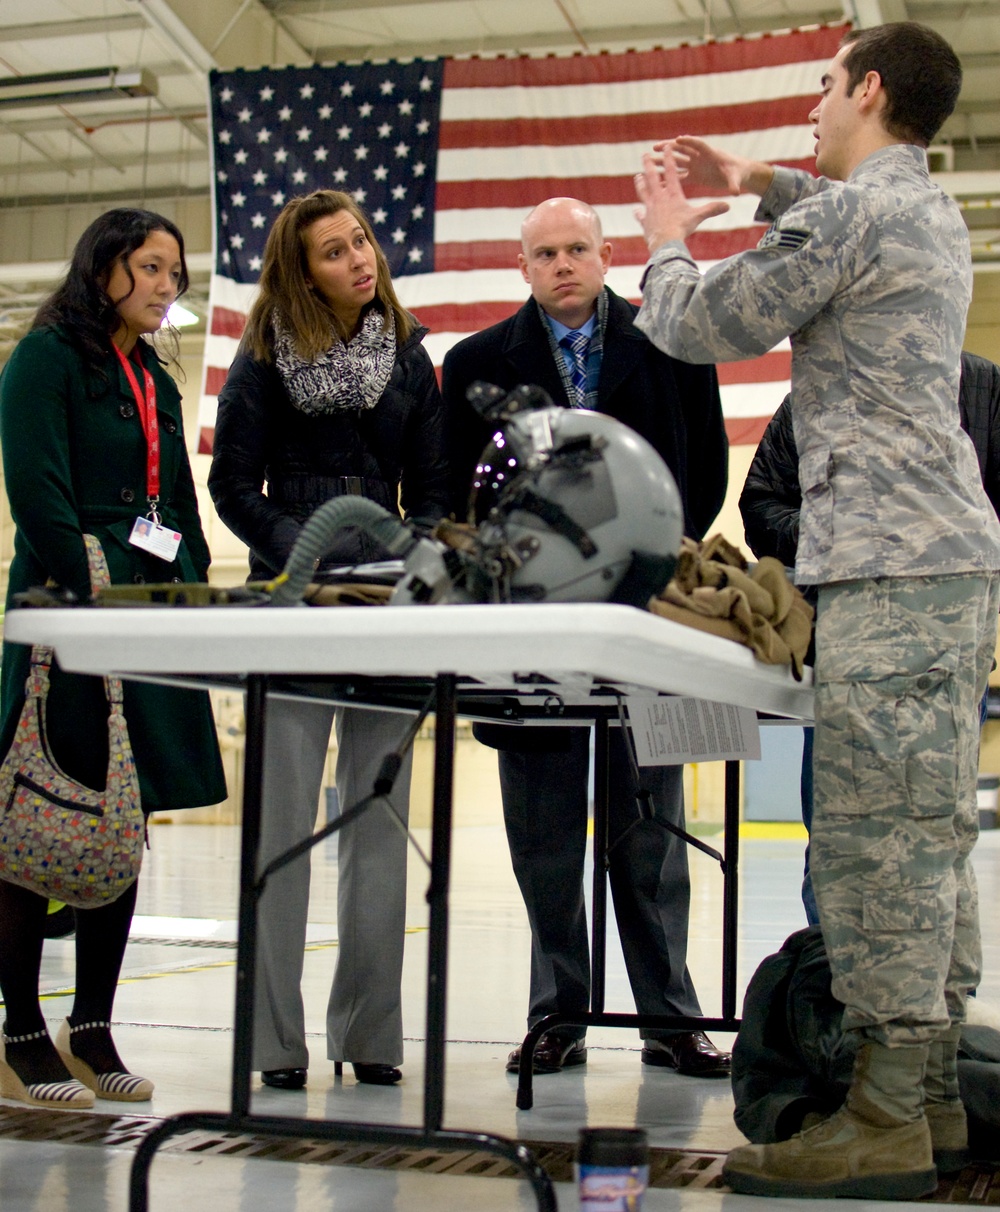 Community leadership school experiences military at Ill. ANG base